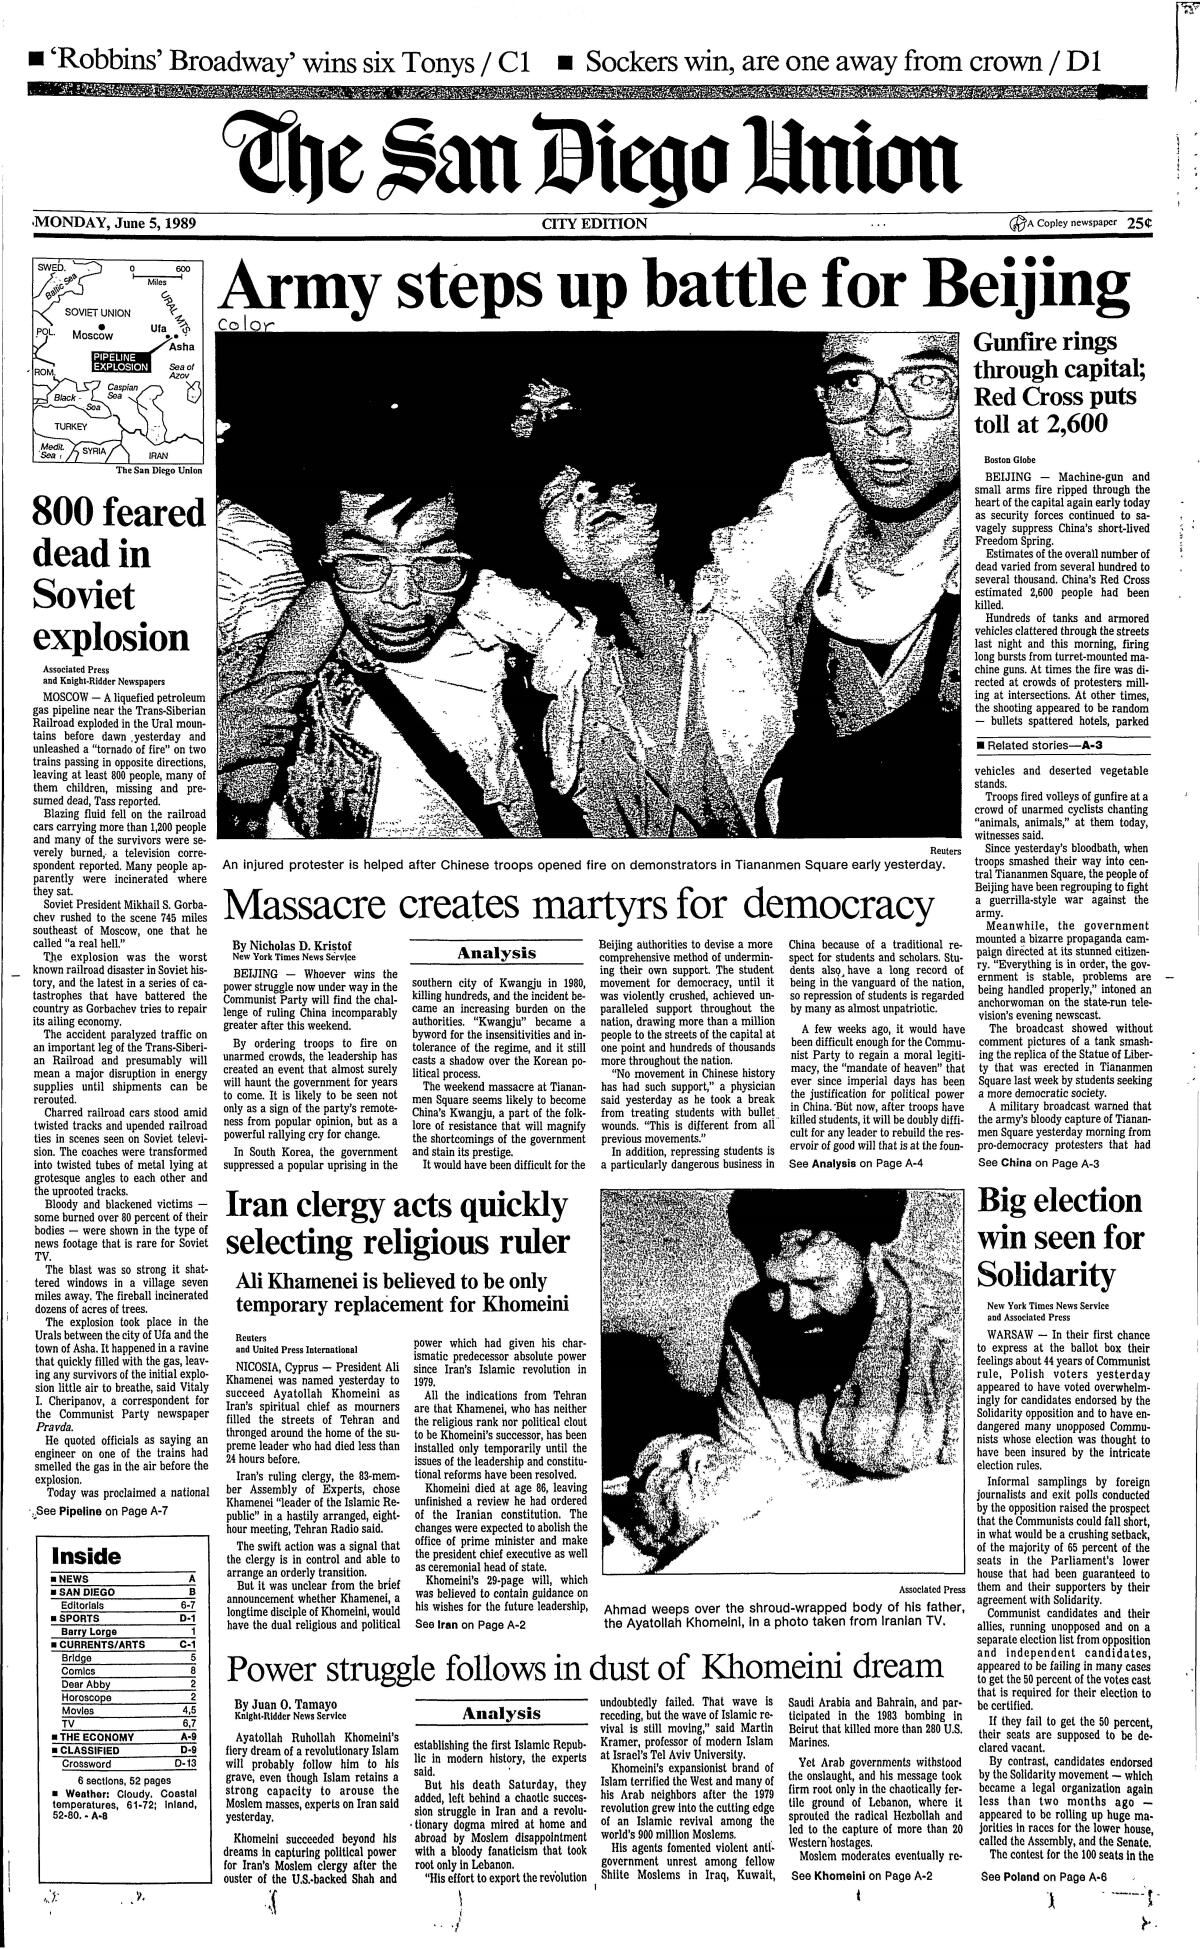 San Diego Union 1989 Tiananmen Square massacre headline